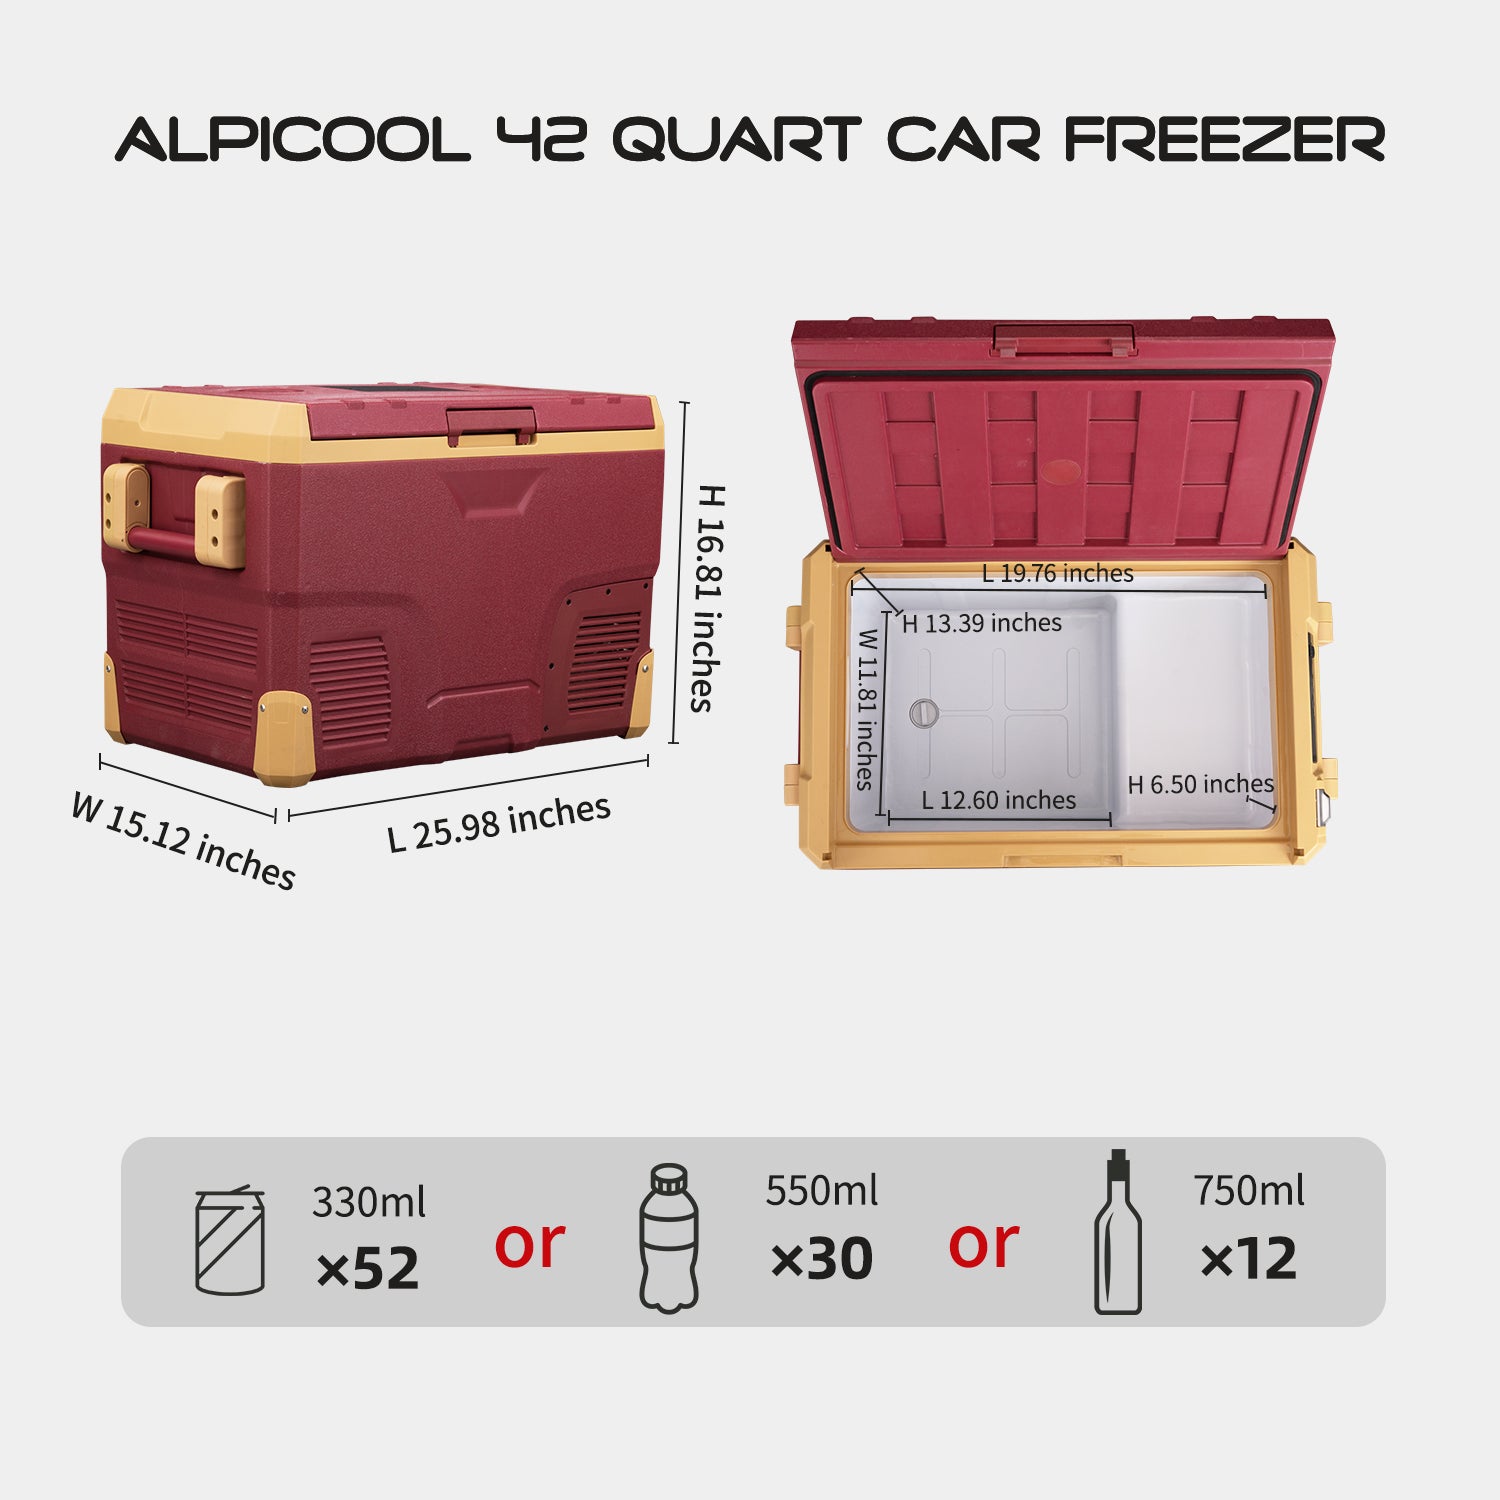 Alpicool IR42 40L Car Refrigerator - Quiet Operation, Bluetooth App, Portable in Grey or Red